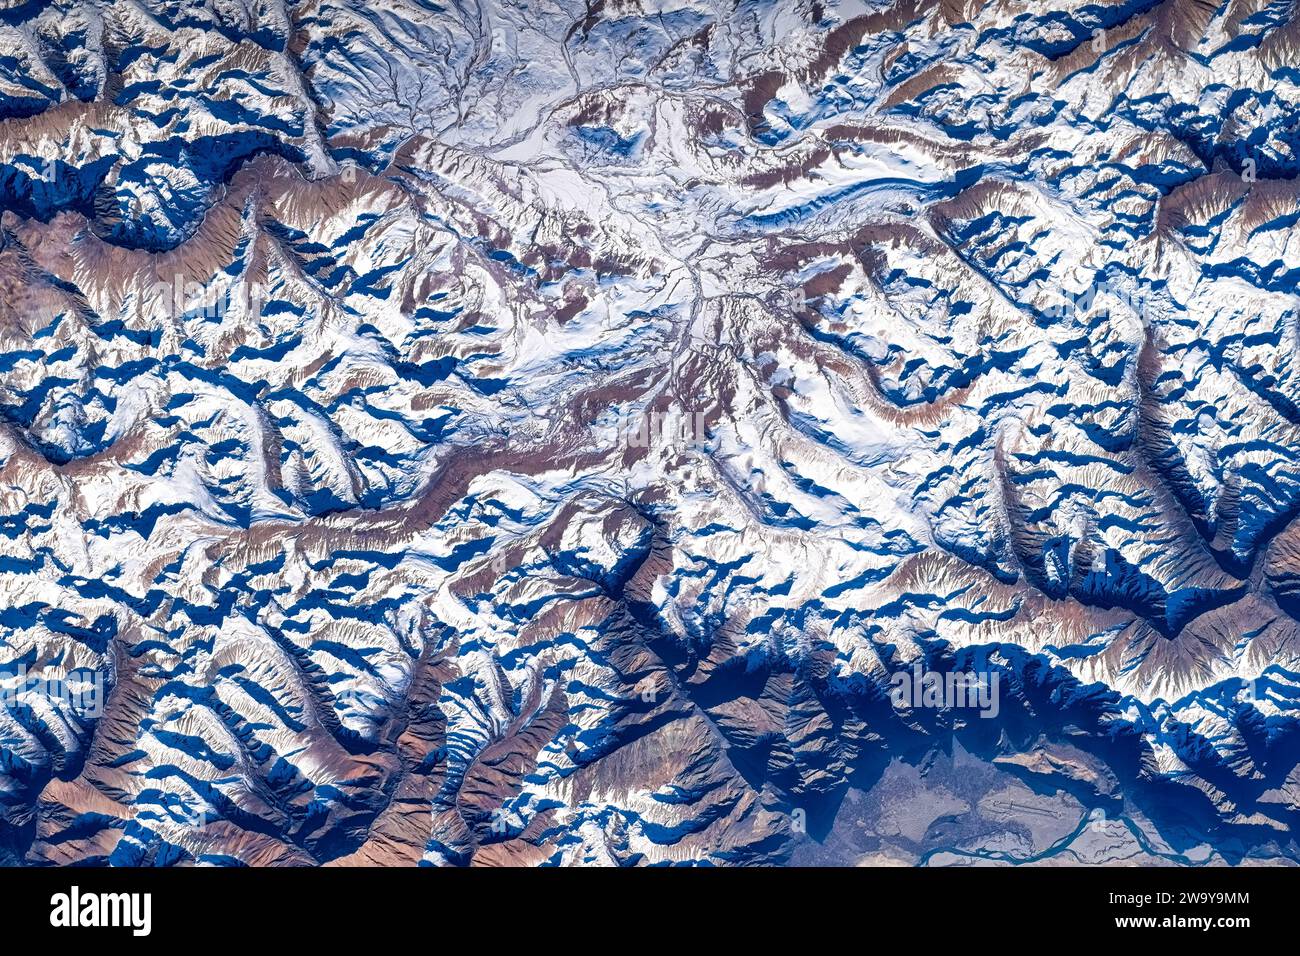 Snow Mountain Land in Afganistan. Digital enhancement of a NASA image. Stock Photo